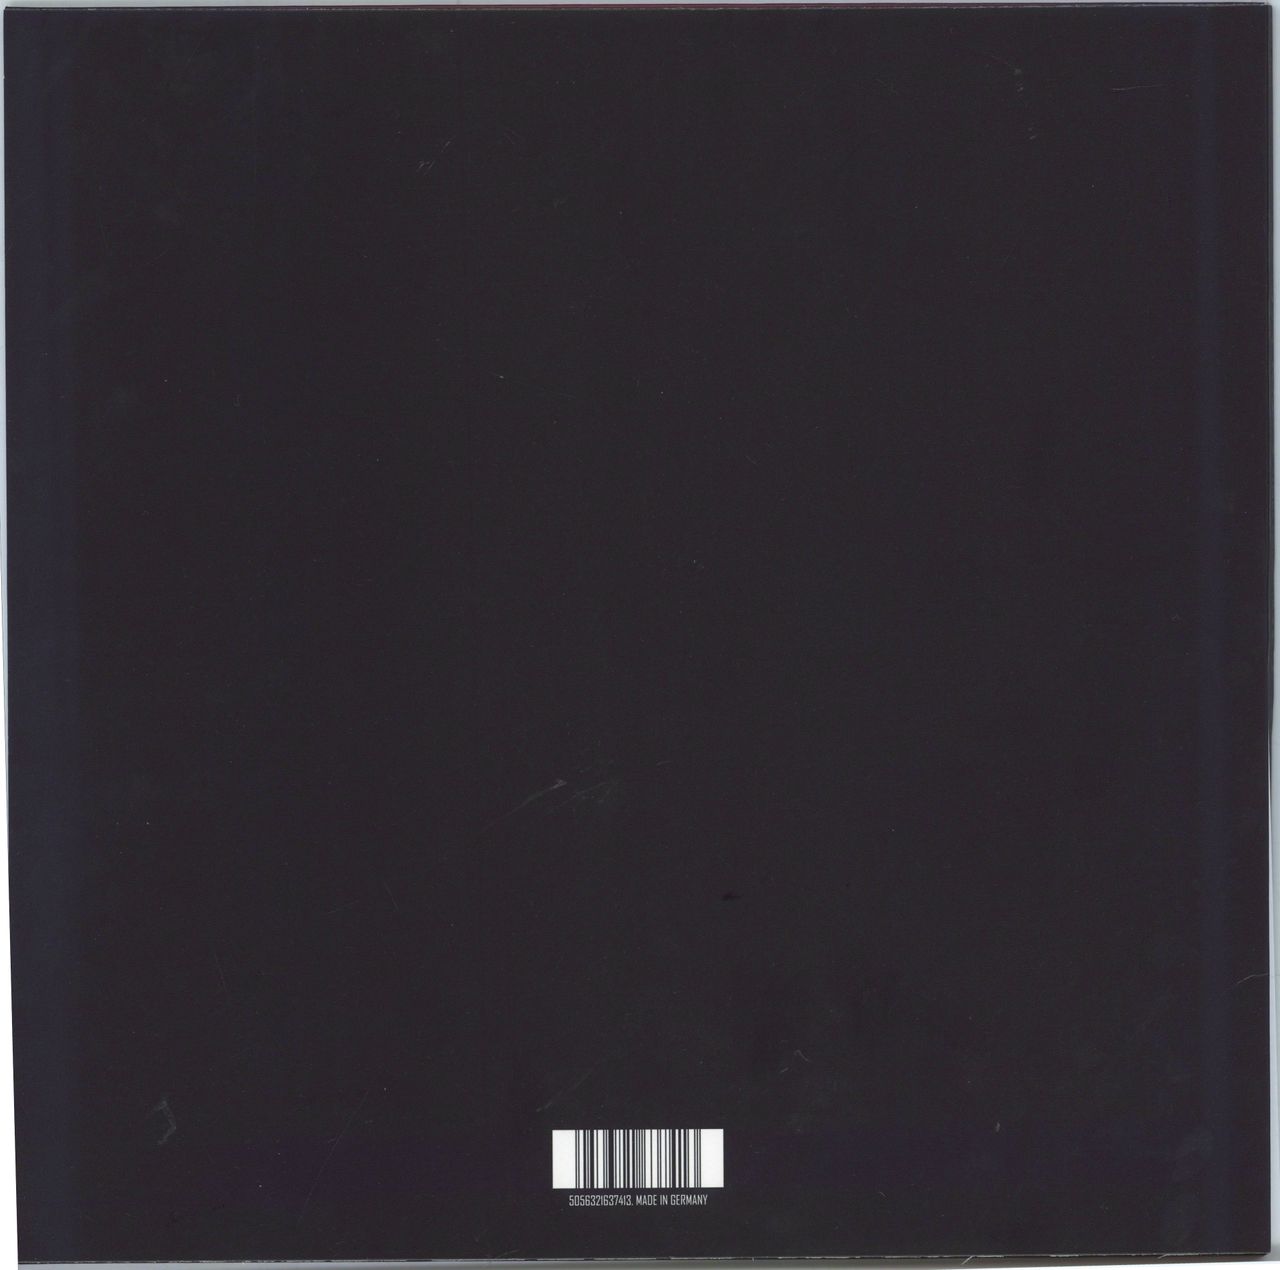 Burial Chemz / Dolphinz UK 12" vinyl single (12 inch record / Maxi-single)